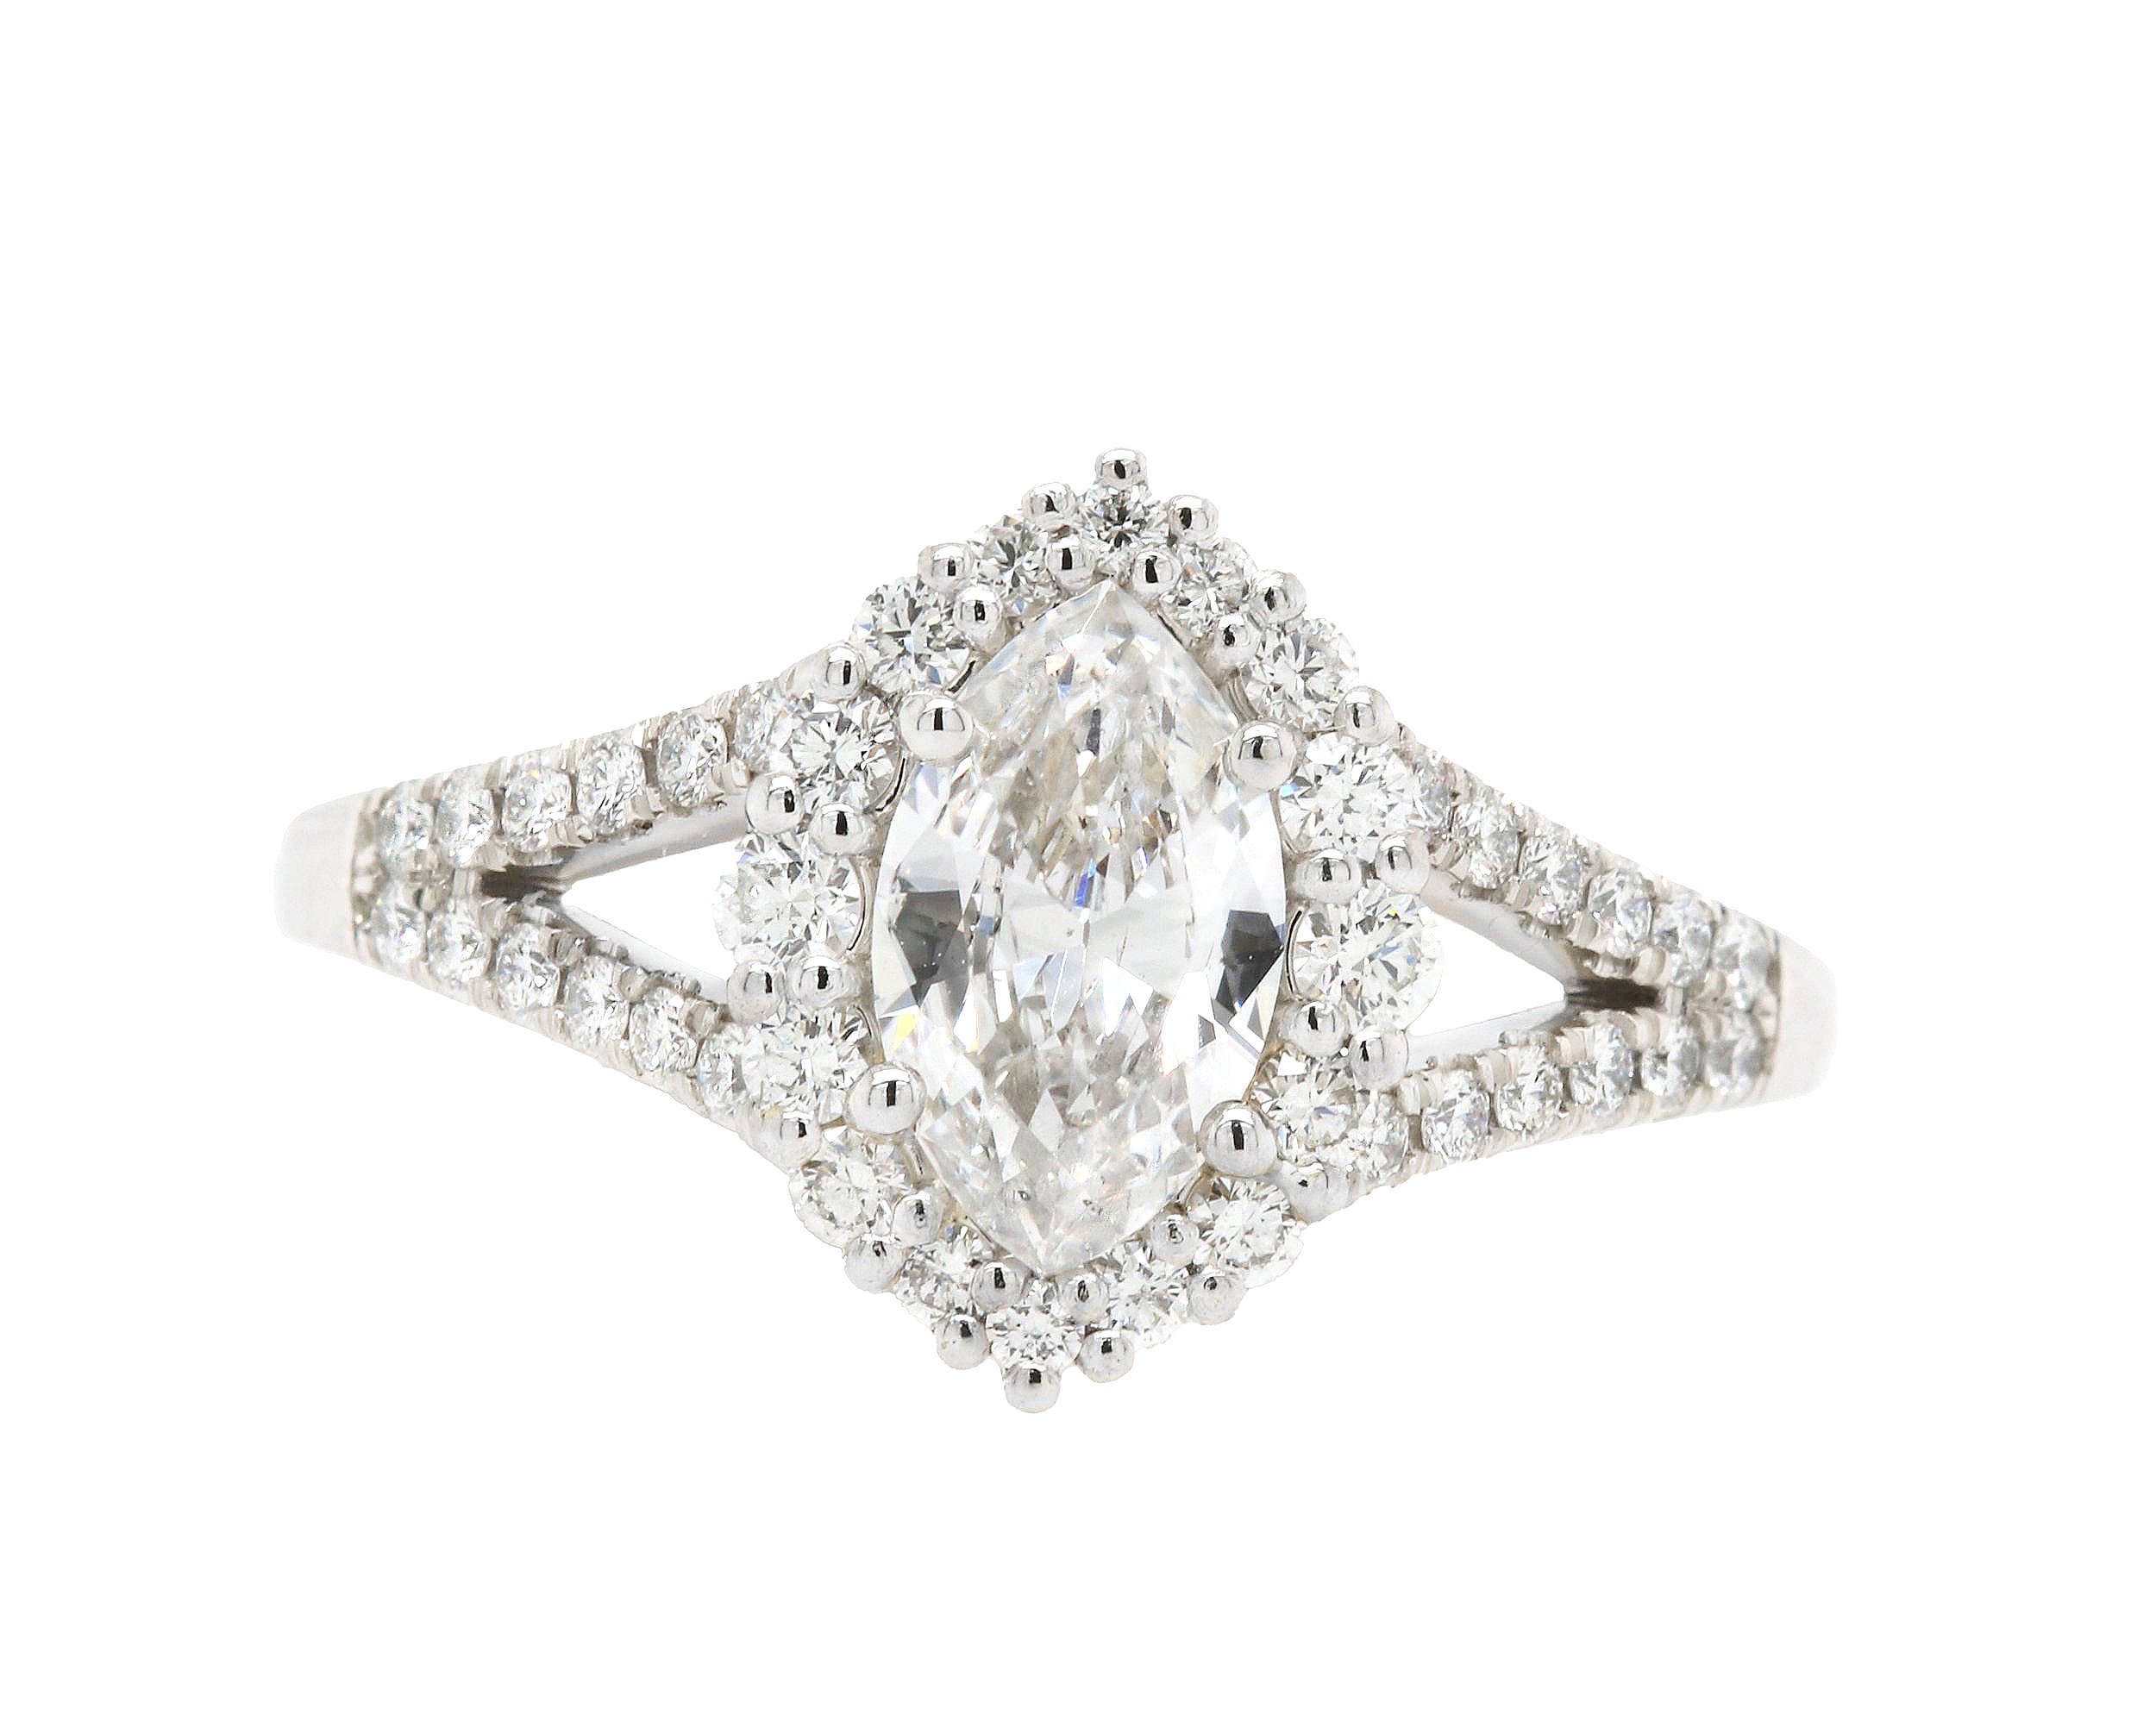 Bianca Marquise: Marquise Diamond Ring in Rose Gold | Ken & Dana Design